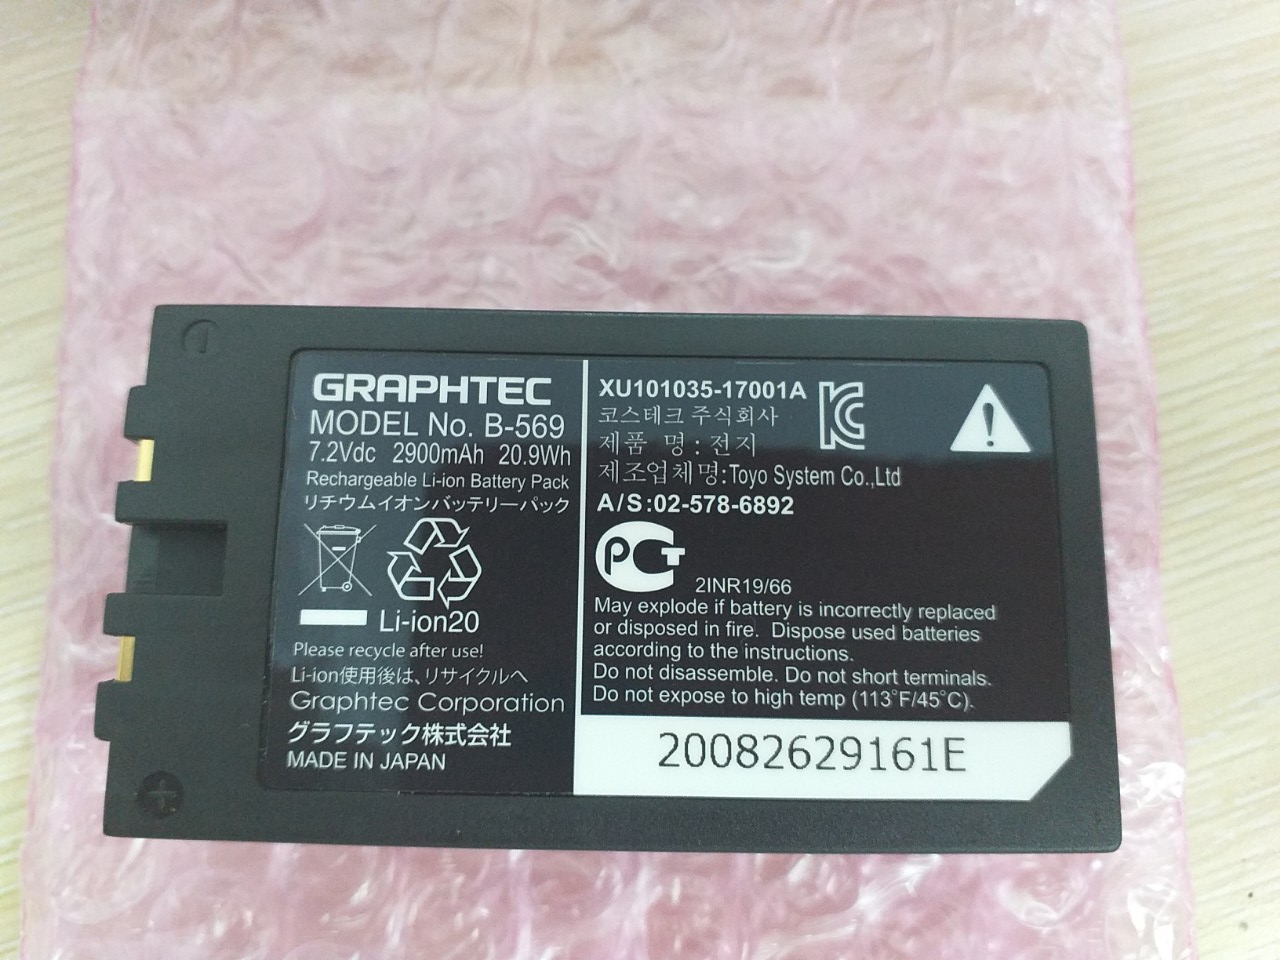 Graphtec battery pack B-569